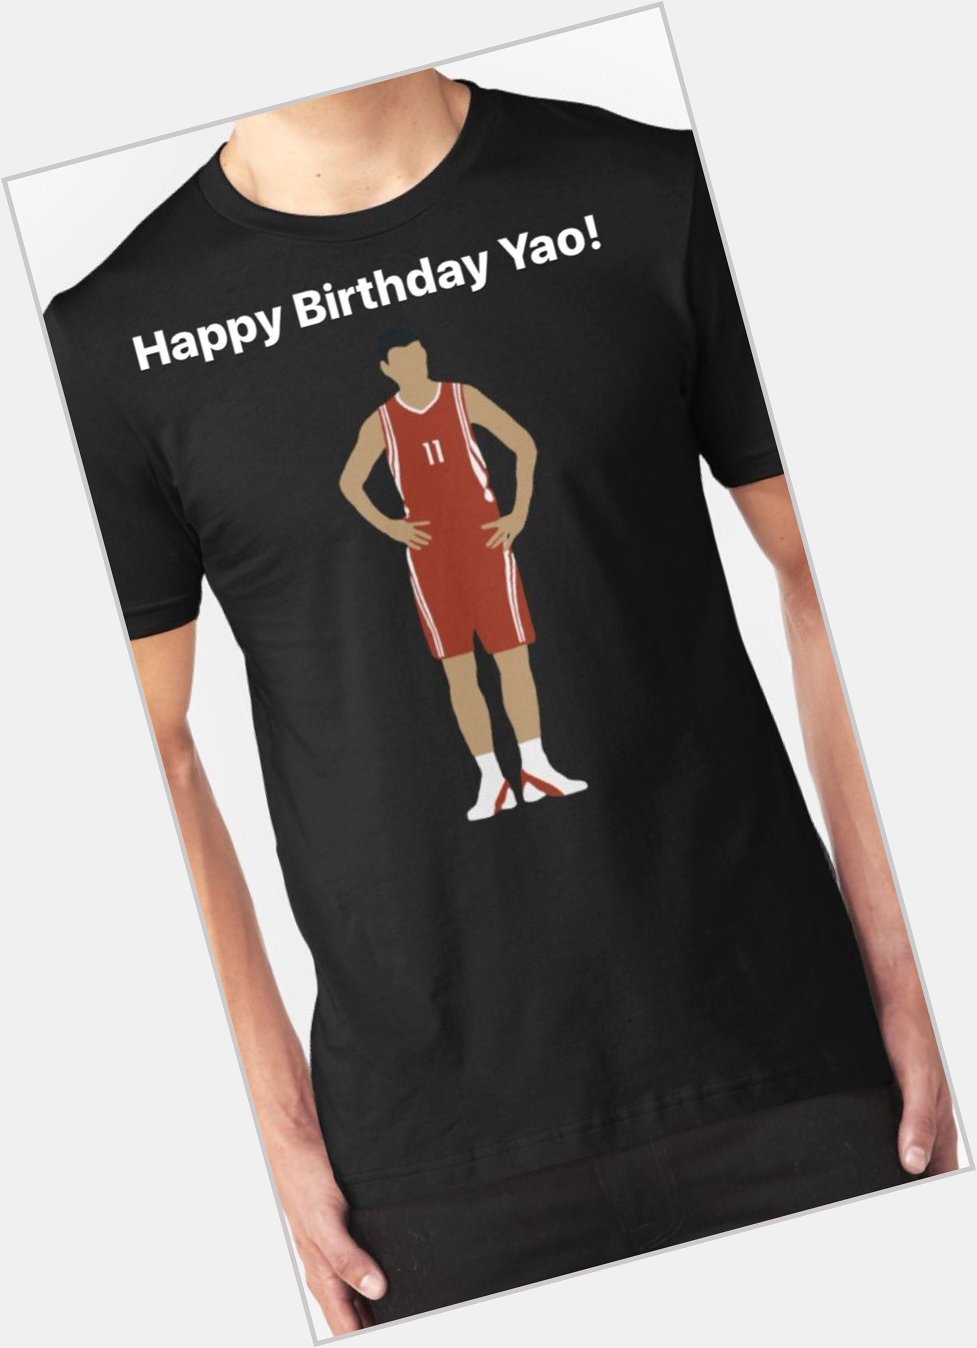 Happy Birthday, Yao Ming!!
 